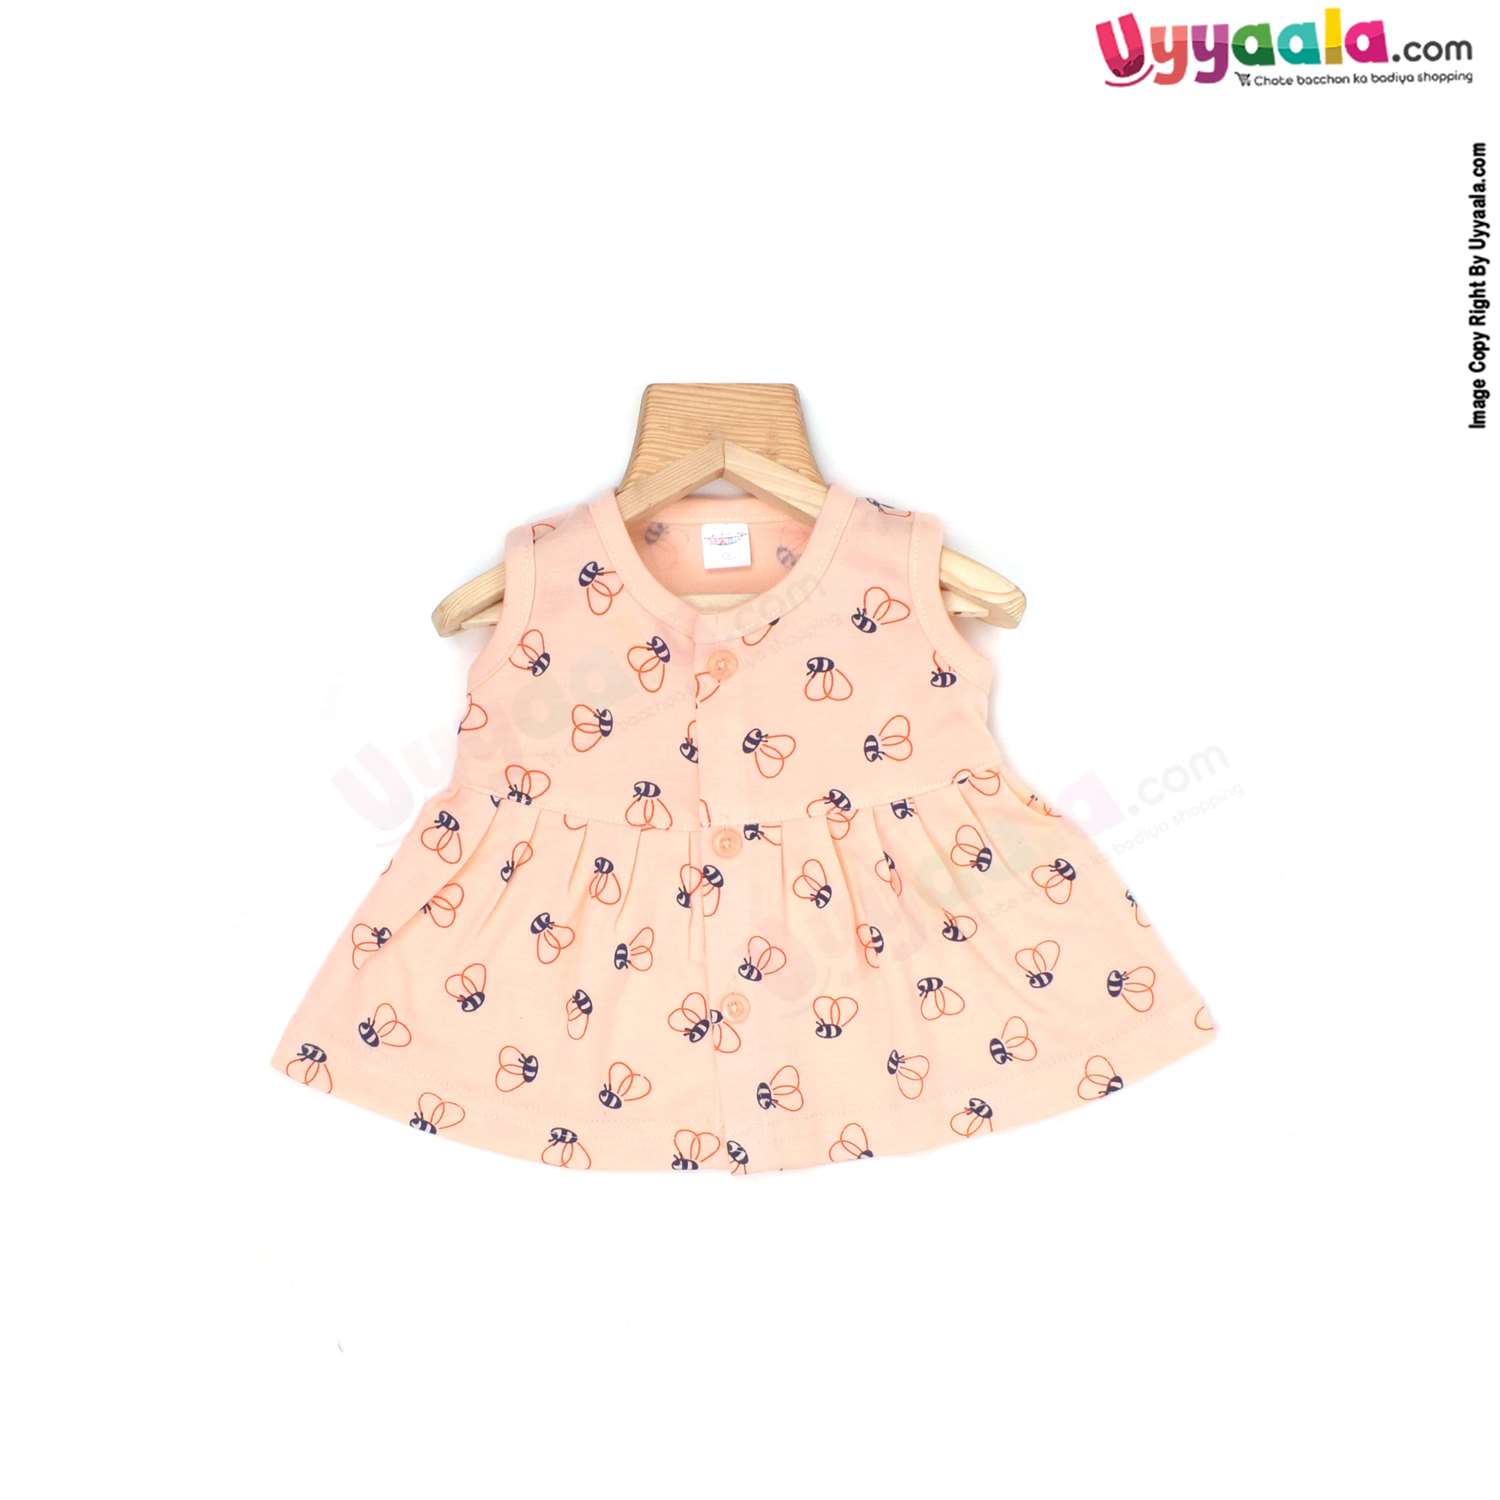 Baby Girls Dress 12 to 18 Months formal dress headband pink baby dress NEW  lace | eBay